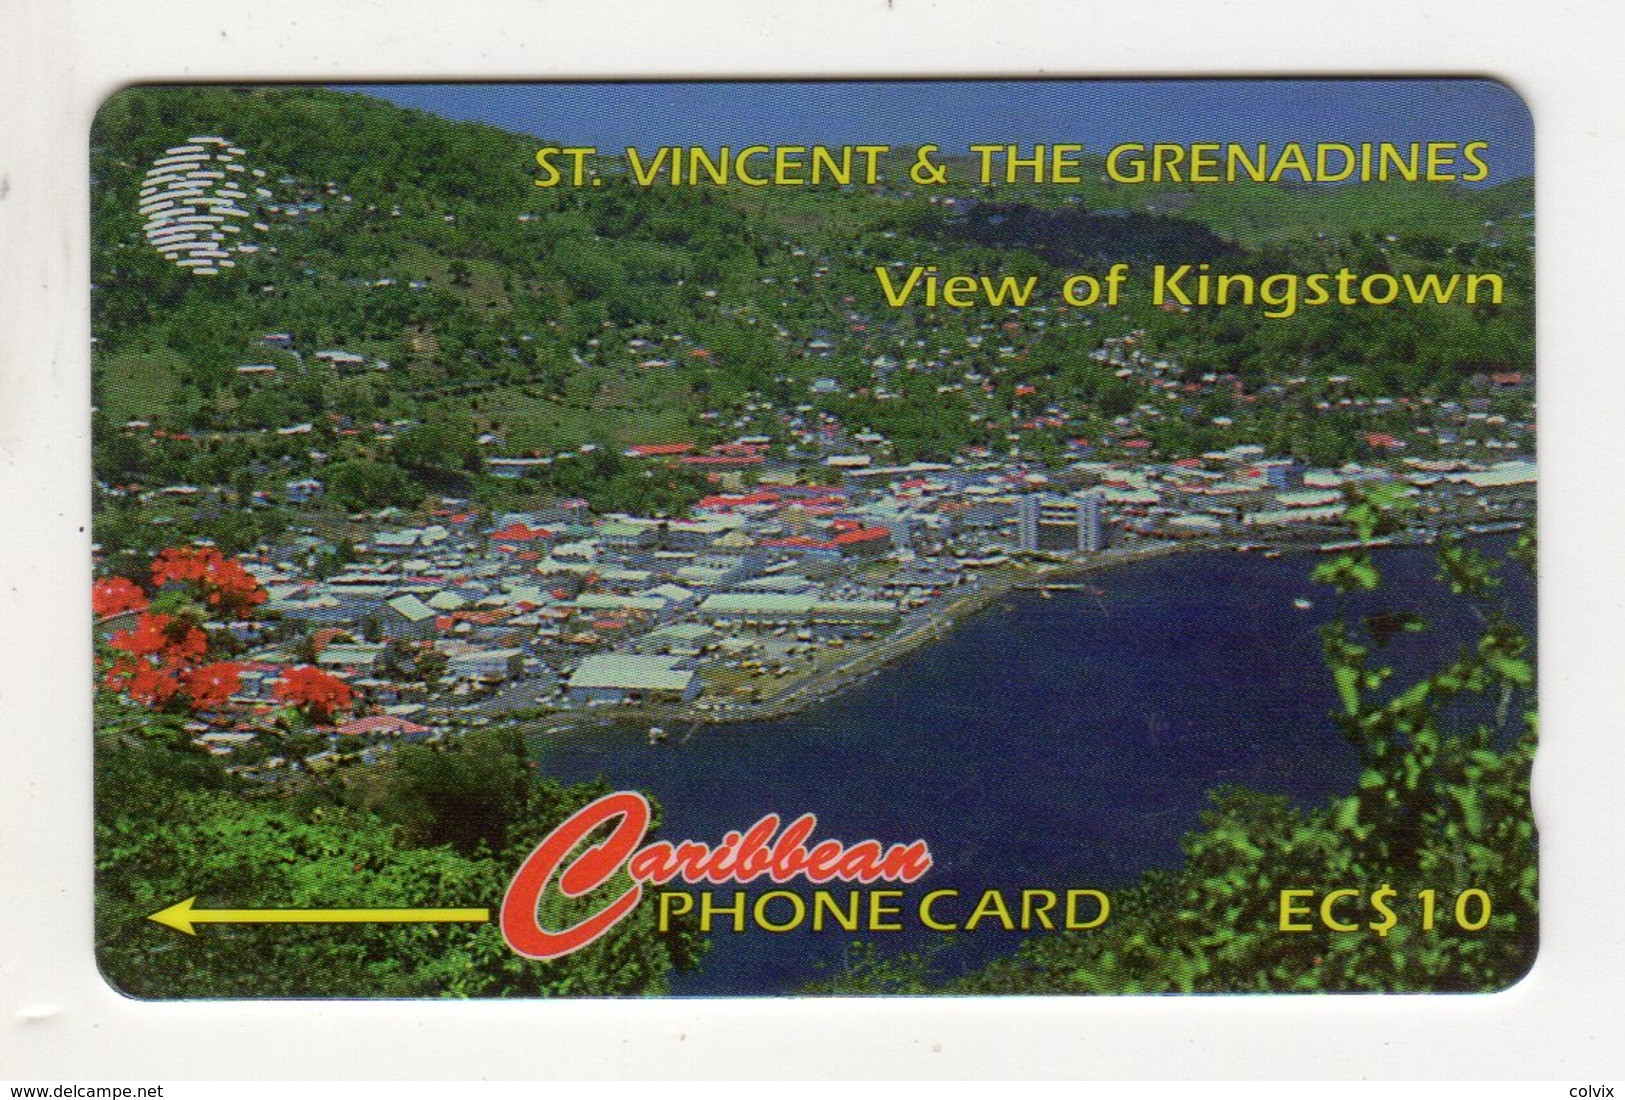 SAINT VINCENT ET GRENADINES REF MV CARDS STV-52B EC $10 52CSVB Date 1996 VIEW Of KINGSTOWN - St. Vincent & The Grenadines